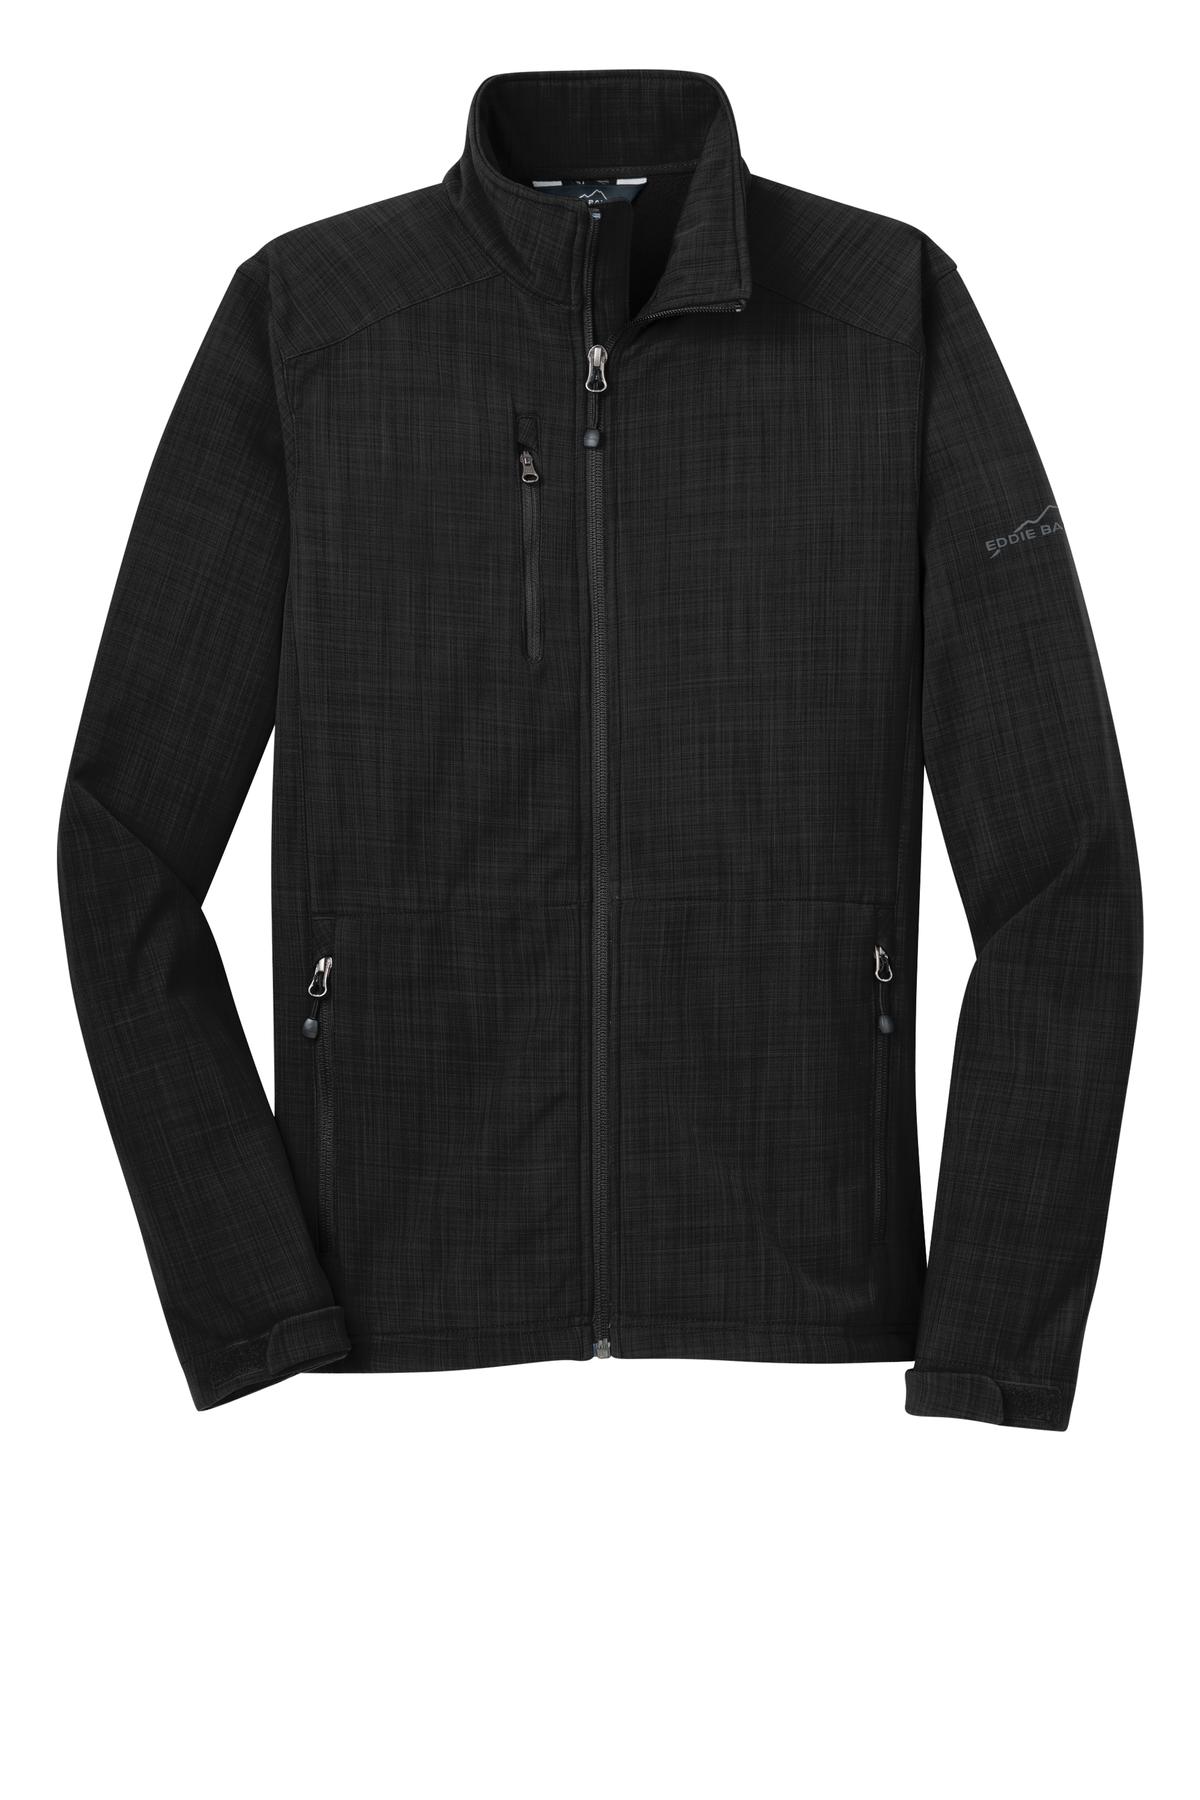 Eddie Bauer ® Shaded Crosshatch Soft Shell Jacket. EB532 - Custom Shirt ...